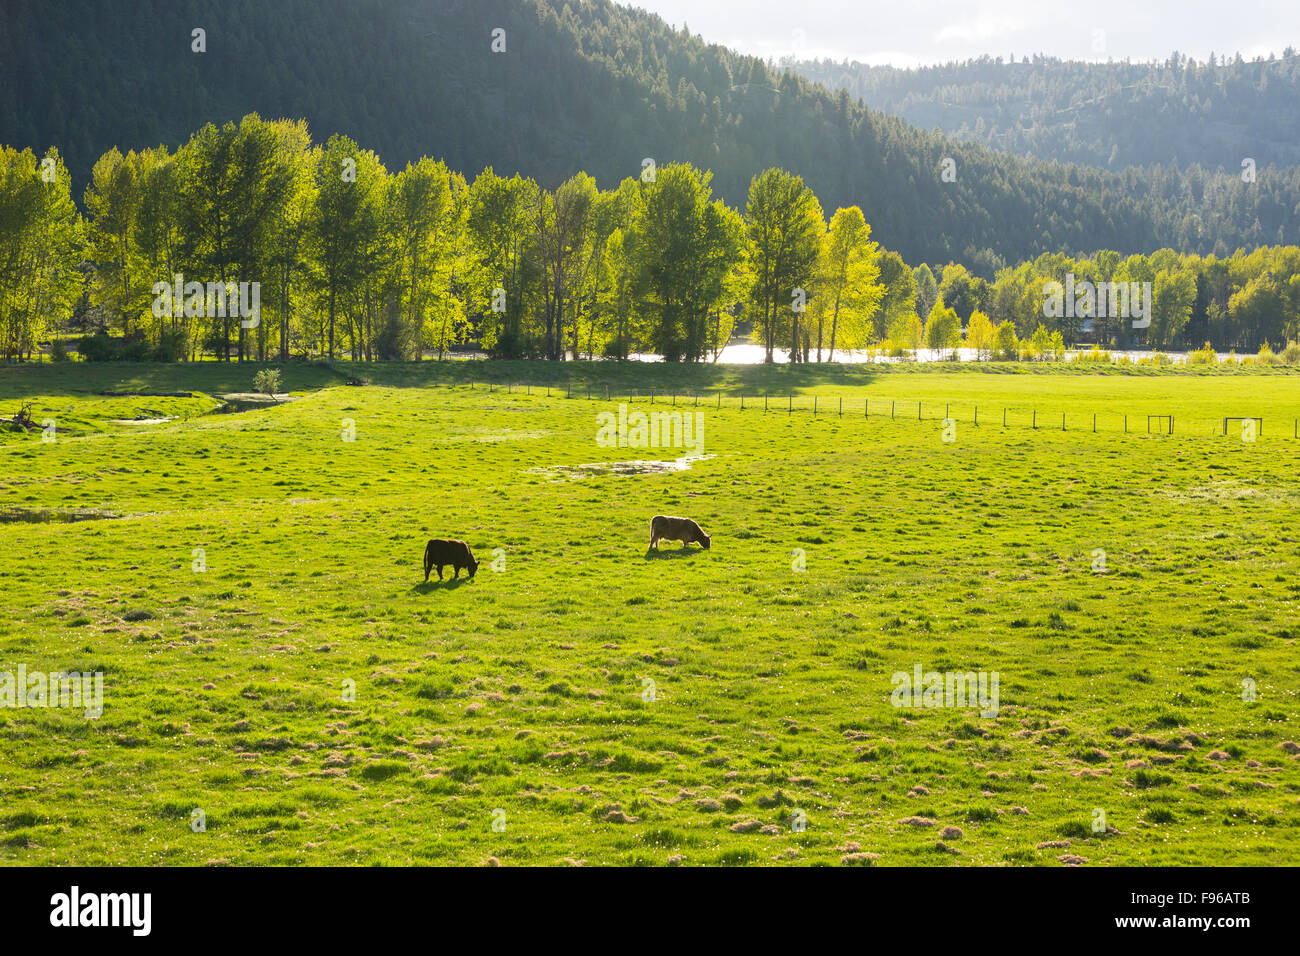 Cattle grazing, Midway, British Columbia, Canada Stock Photo